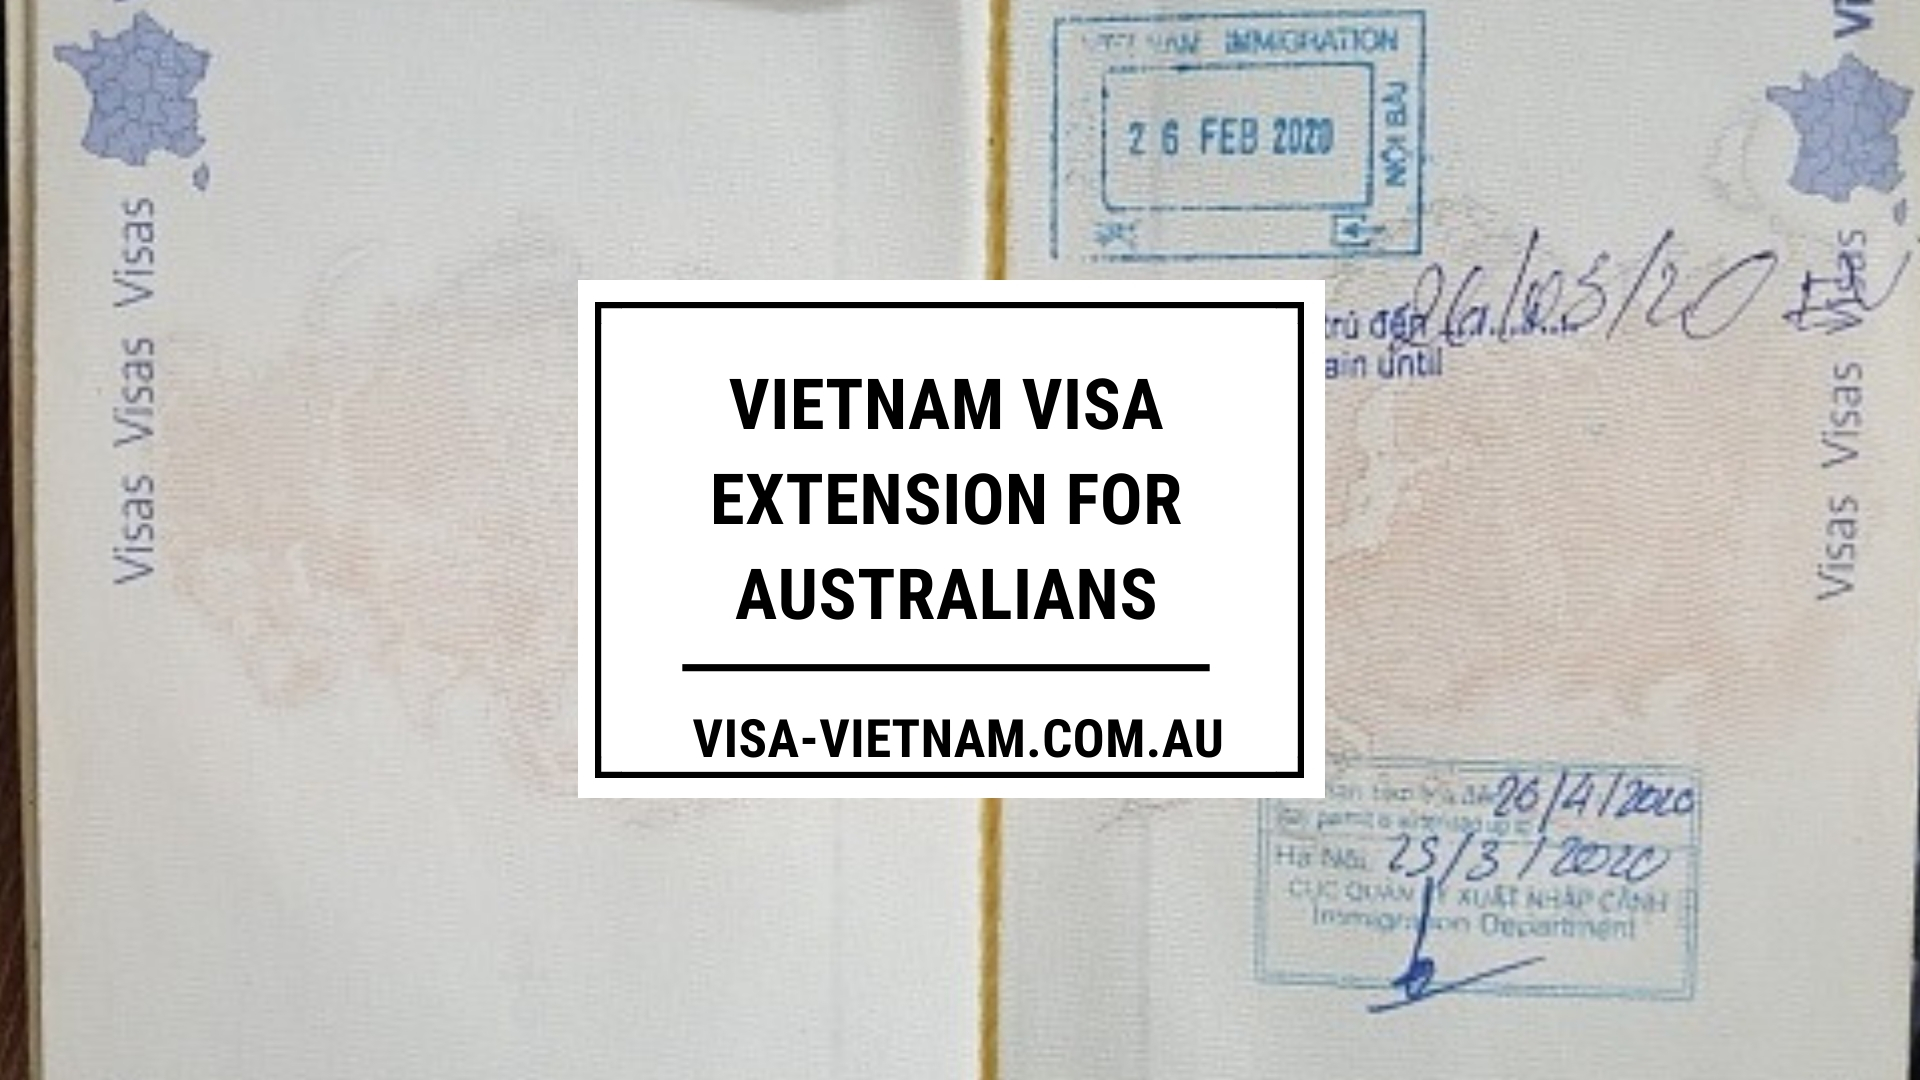 Vietnam visa extension for Australians